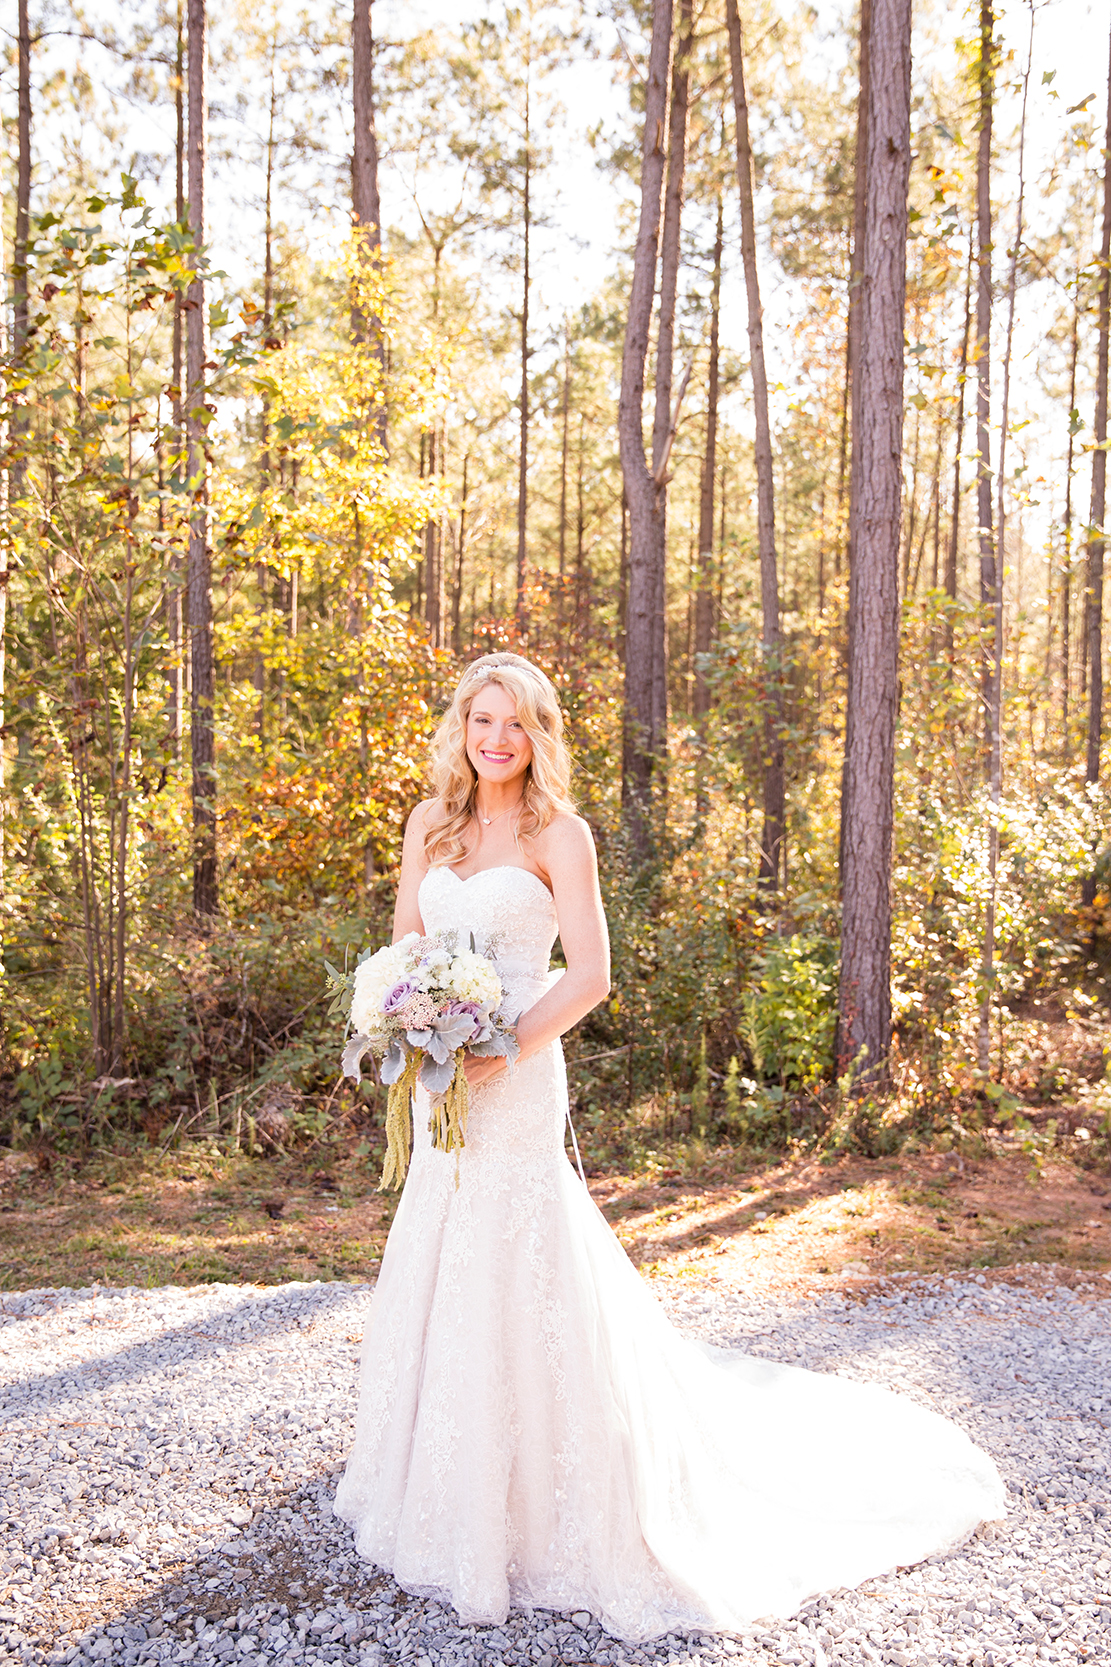 Megan  Joshs Wedding in the Woods - Image Property of www.j-dphoto.com